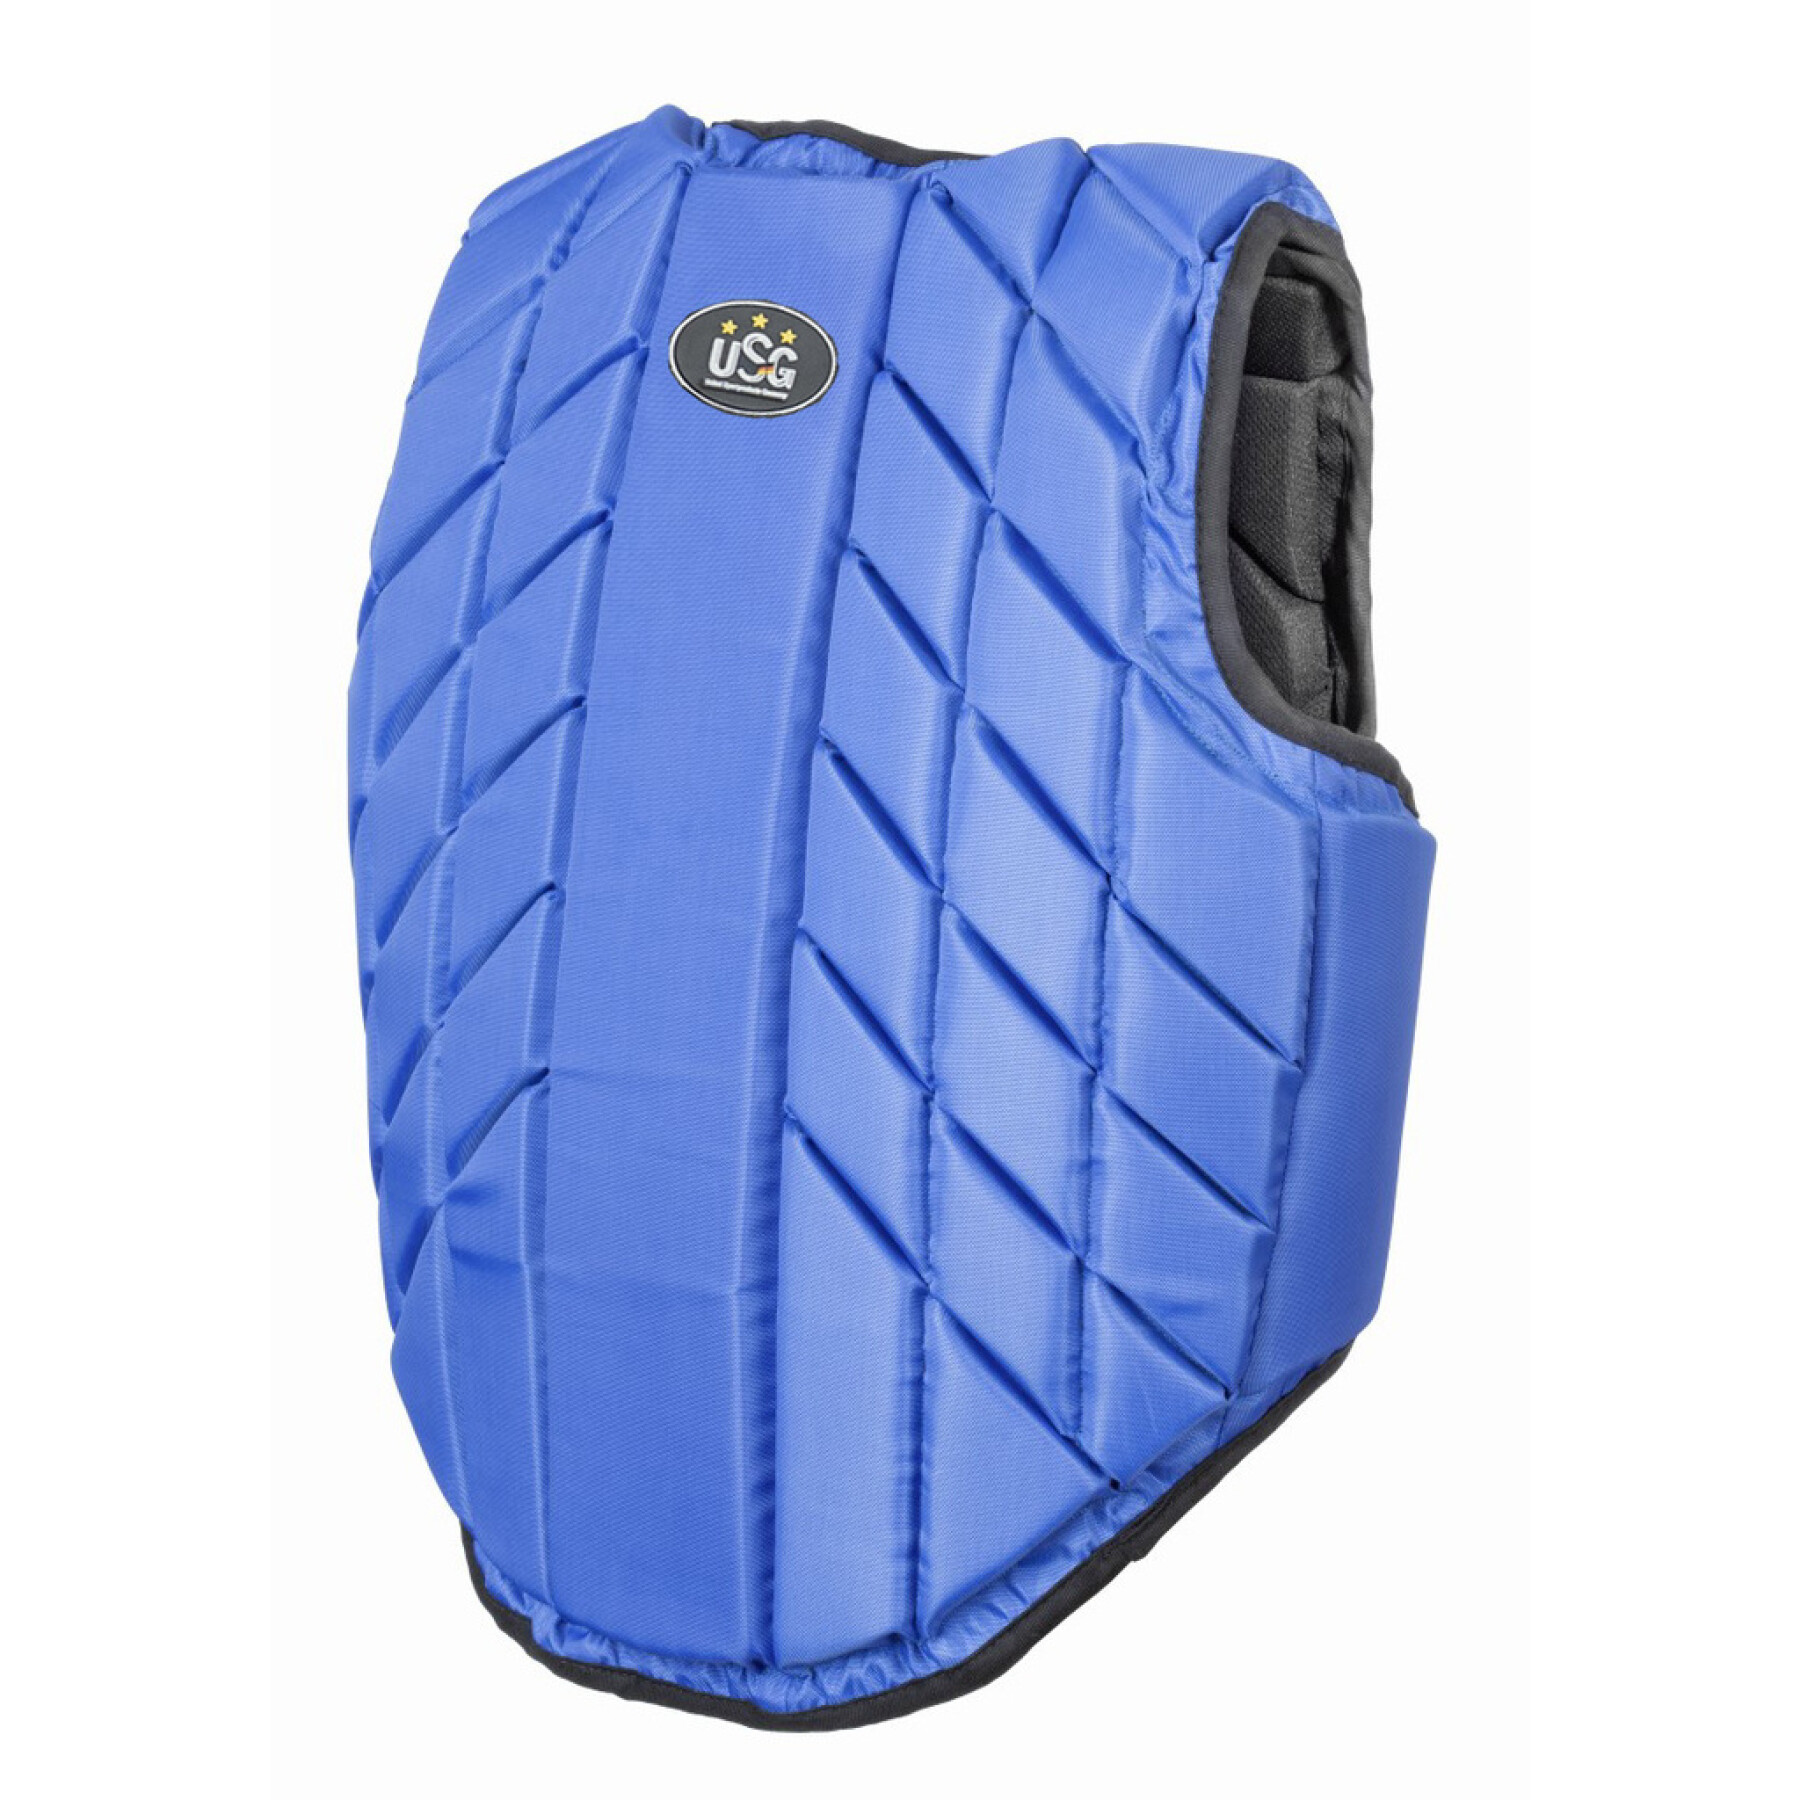 Riding protection vest USG Eco-Flexi